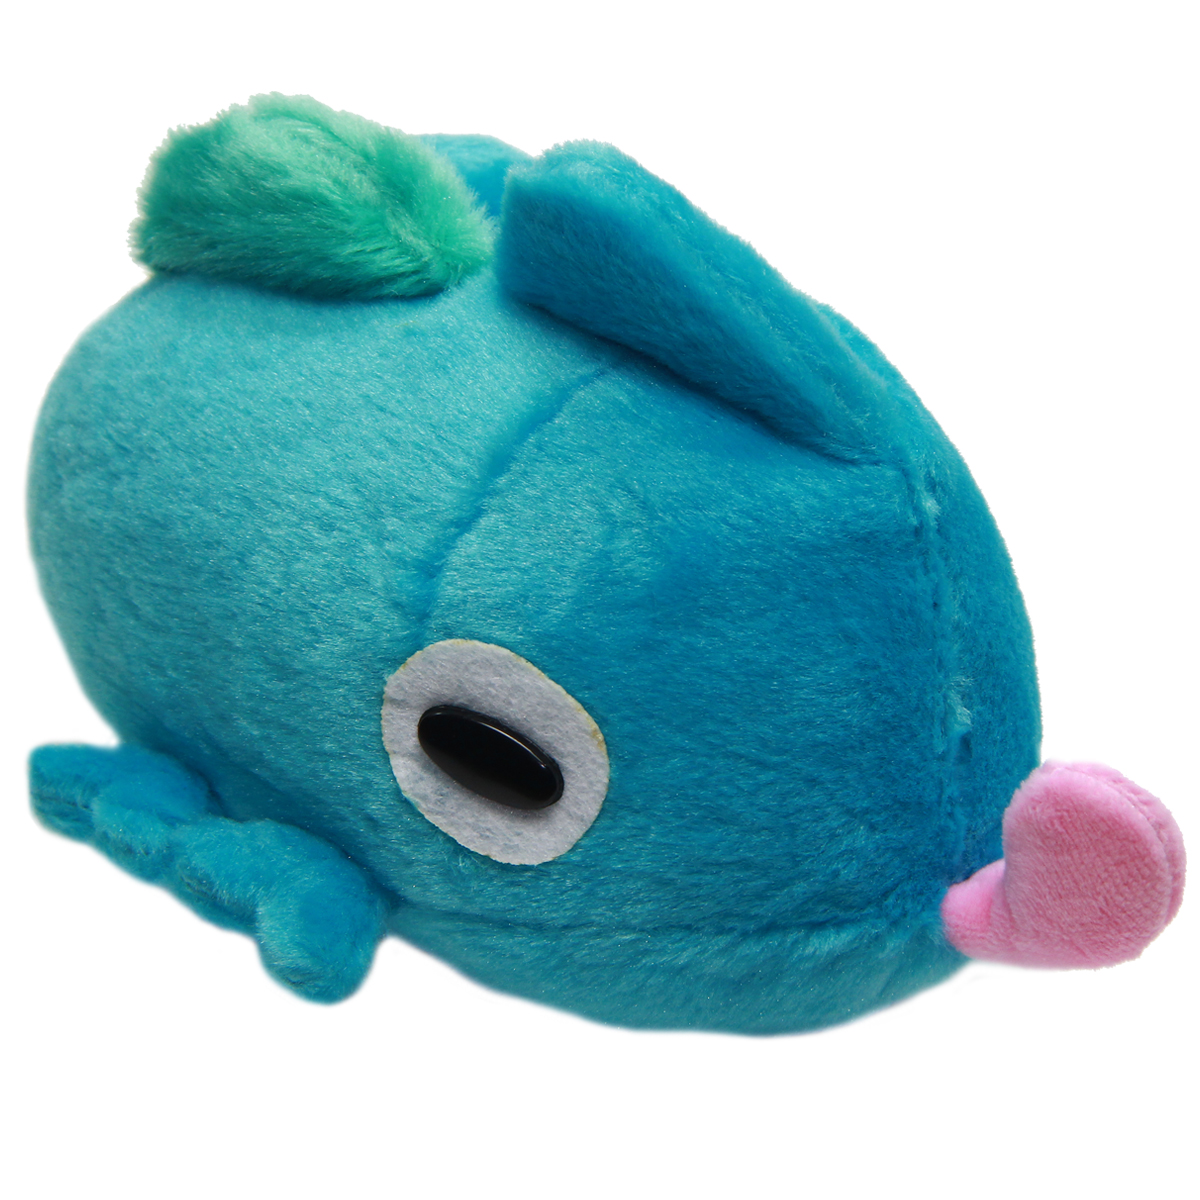 Chameleon Plushie Super Soft Squishy Stuffed Animal Toy Blue Size 7 Inches